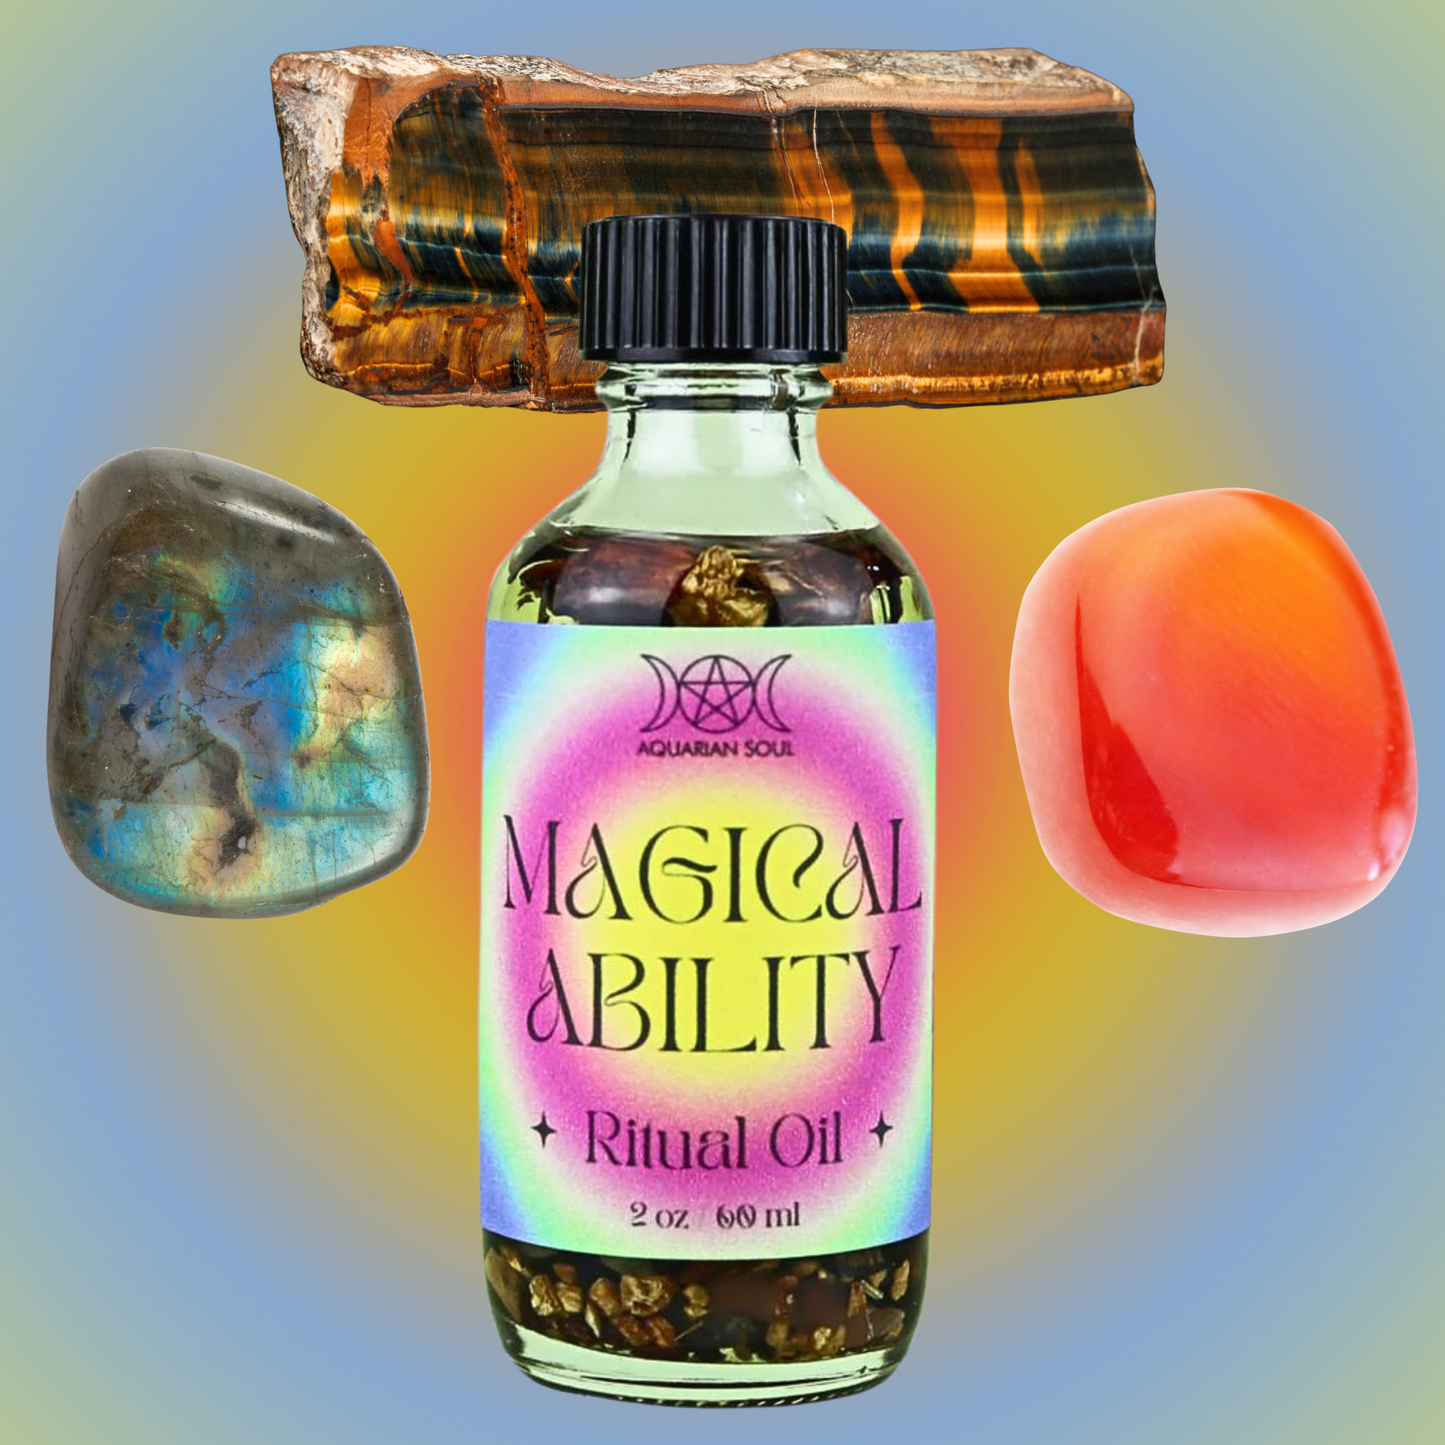 Magical Ability Ritual Oil